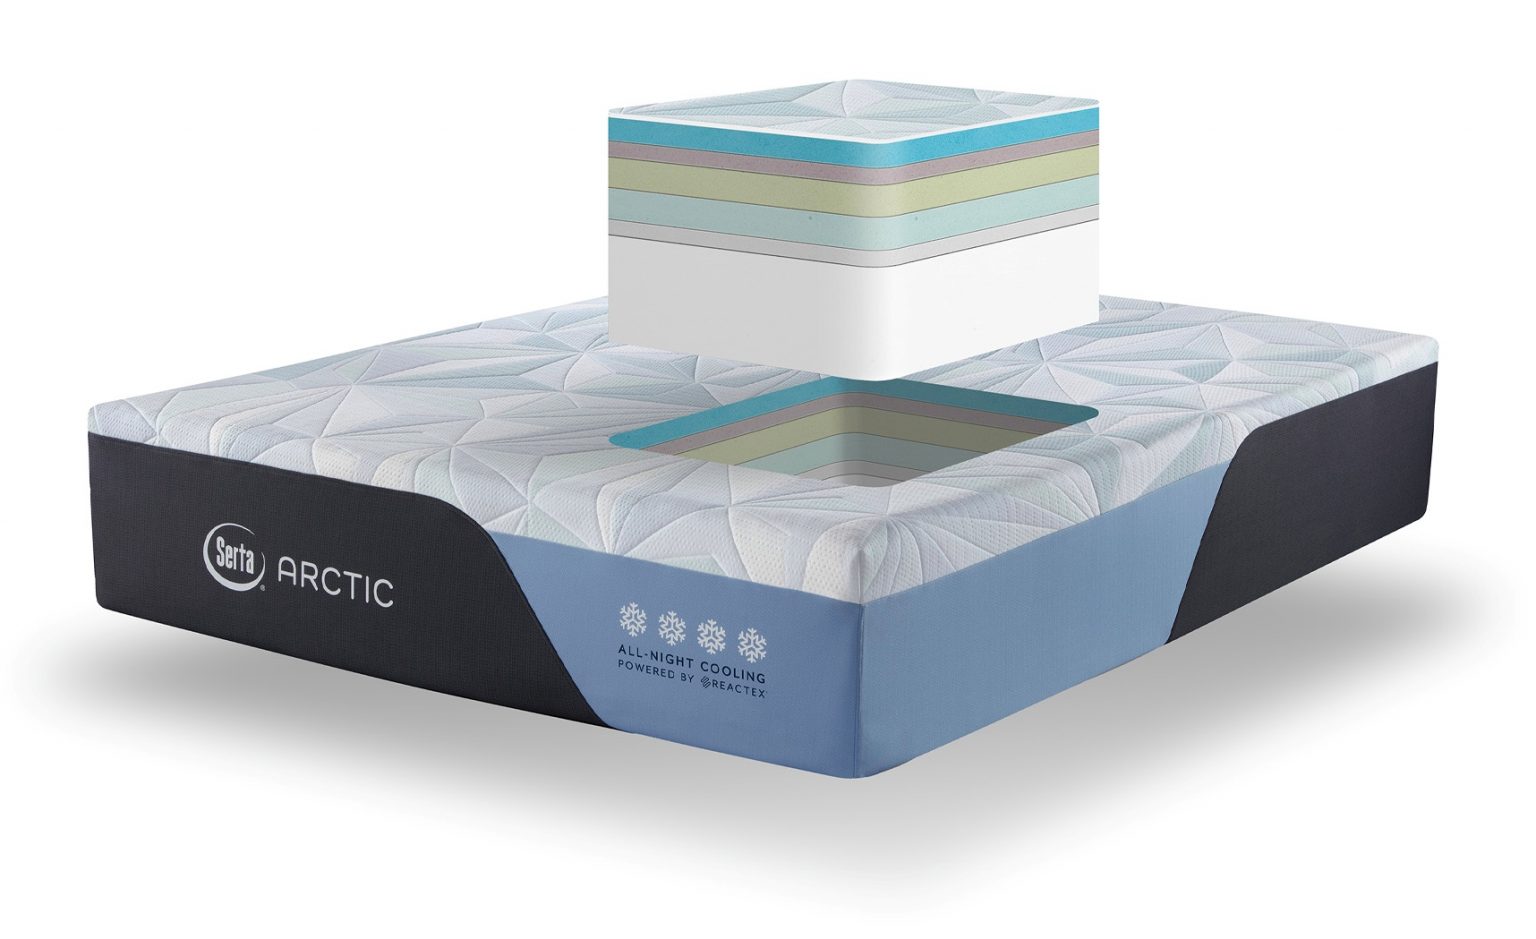 serta arctic hybrid plush mattress